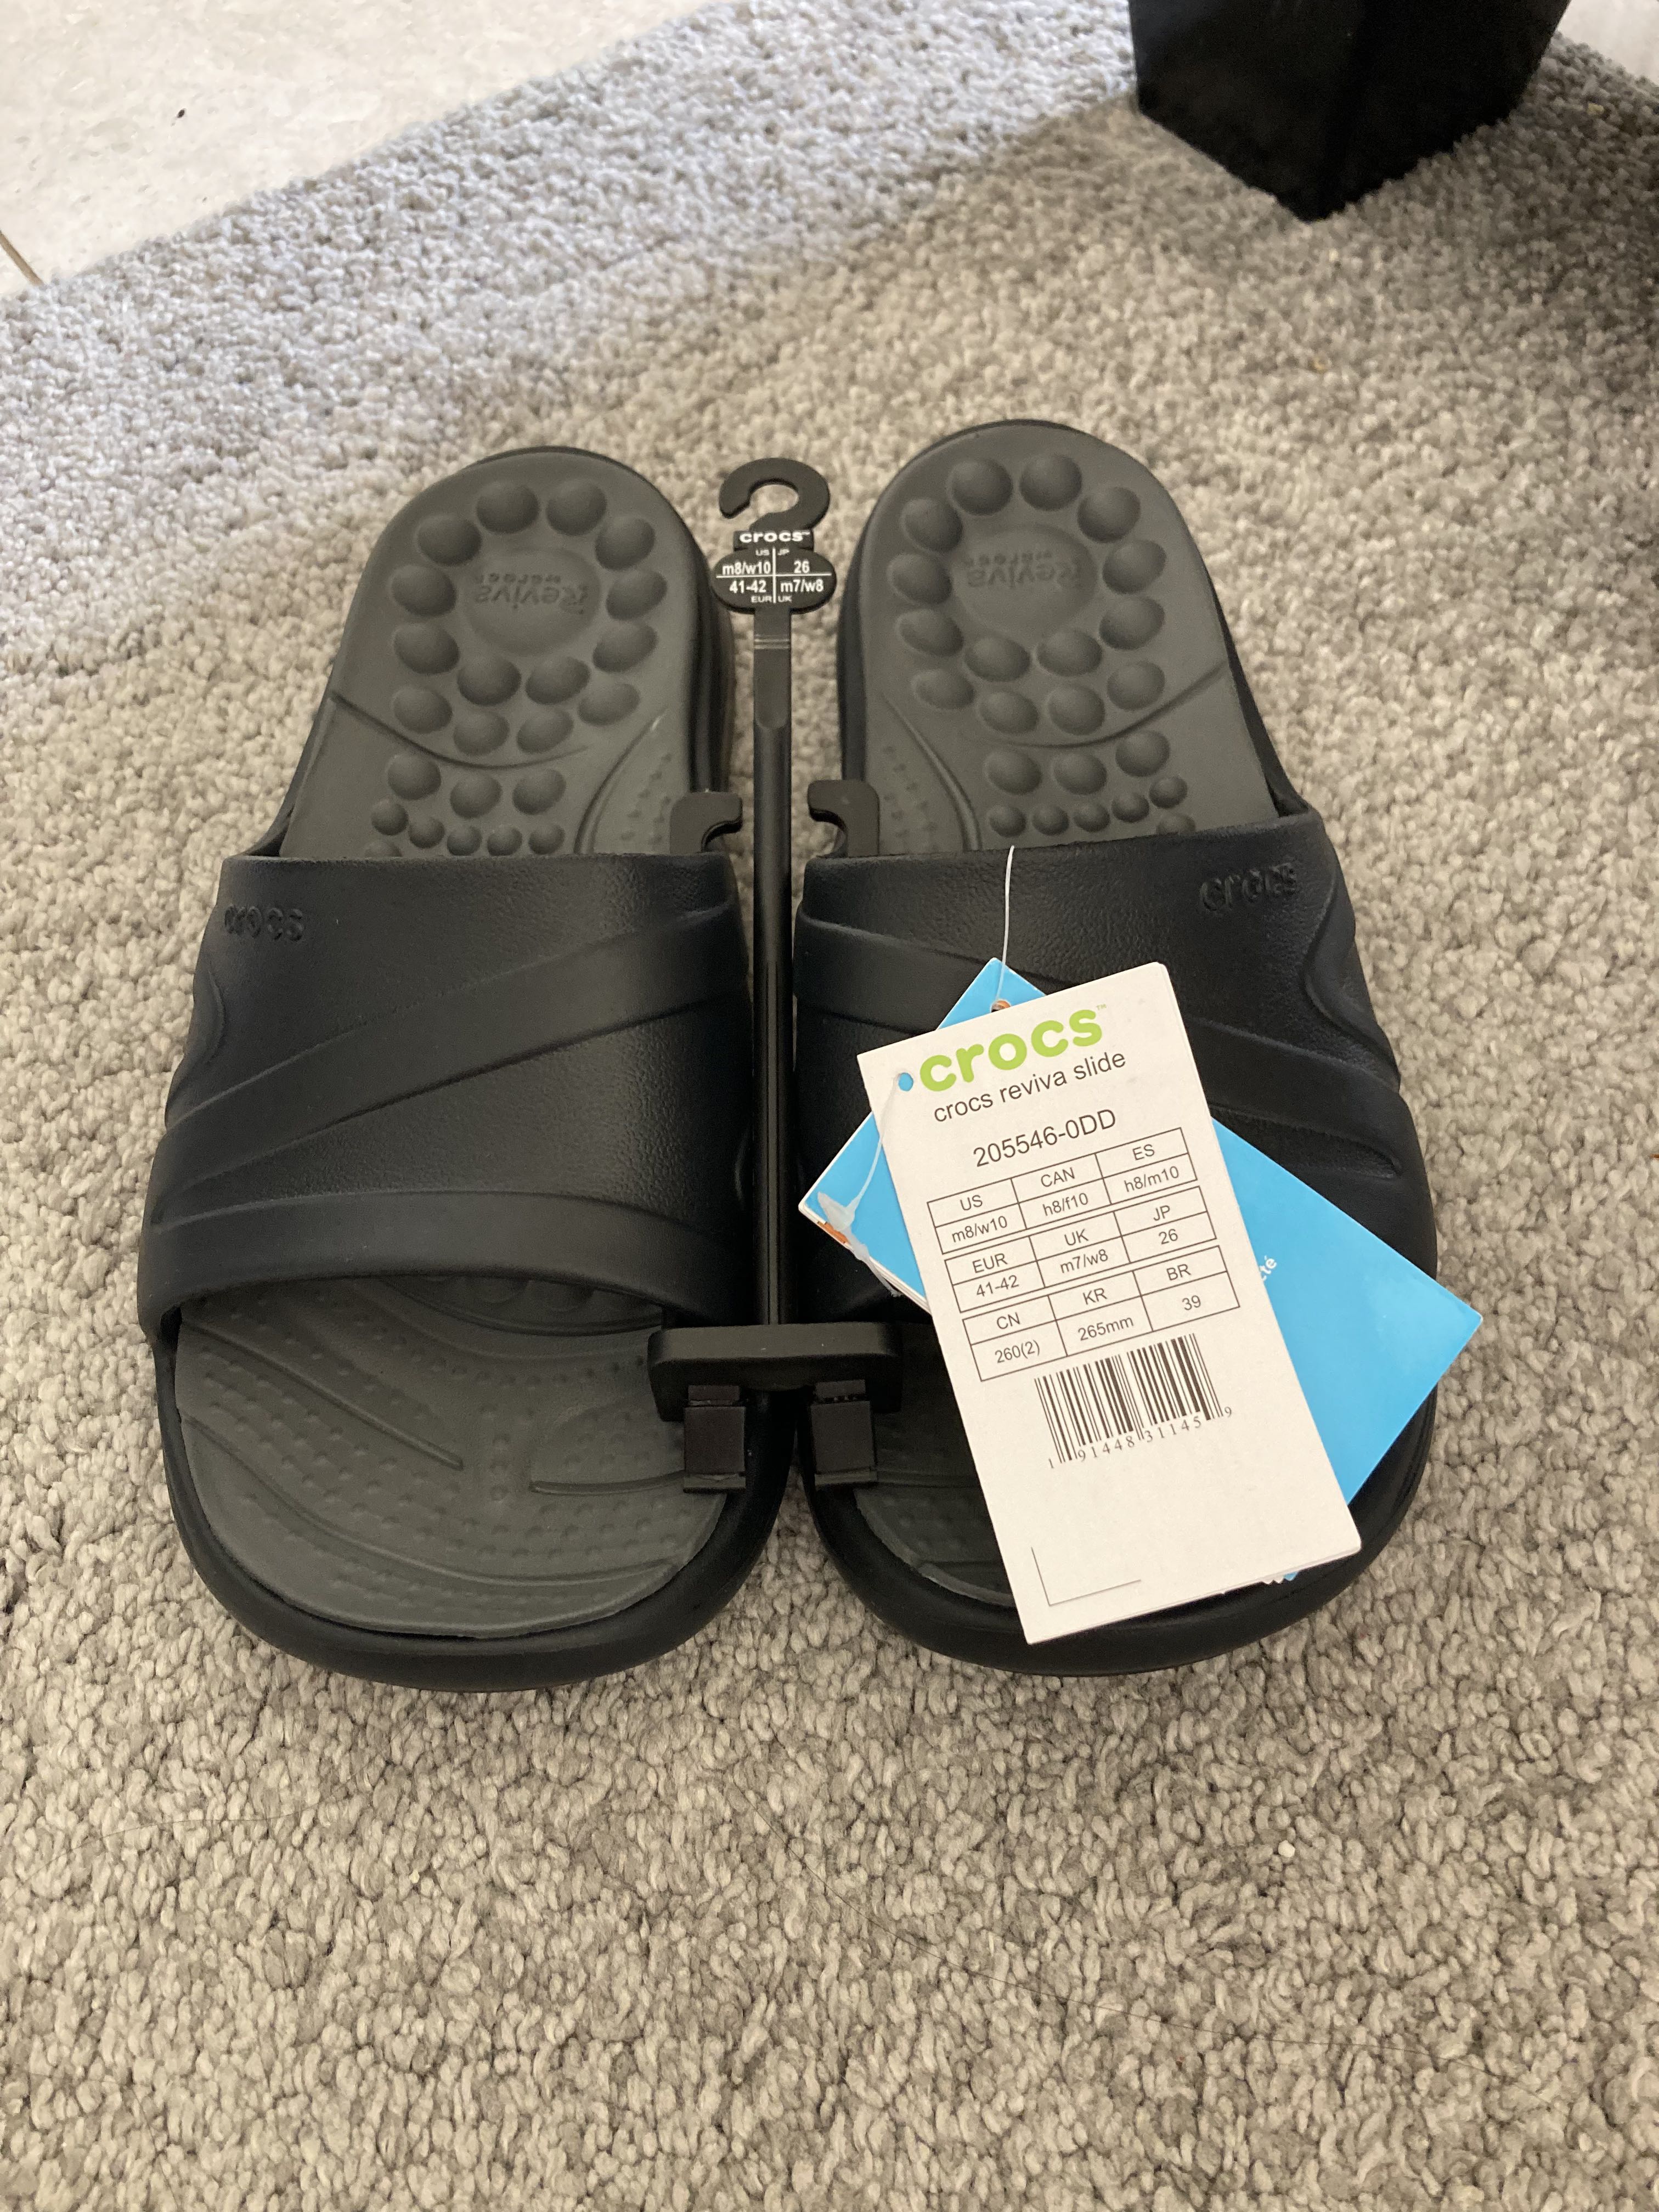 Crocs Reviva Slides Black M8W10, Men's Fashion, Footwear, Slippers ...